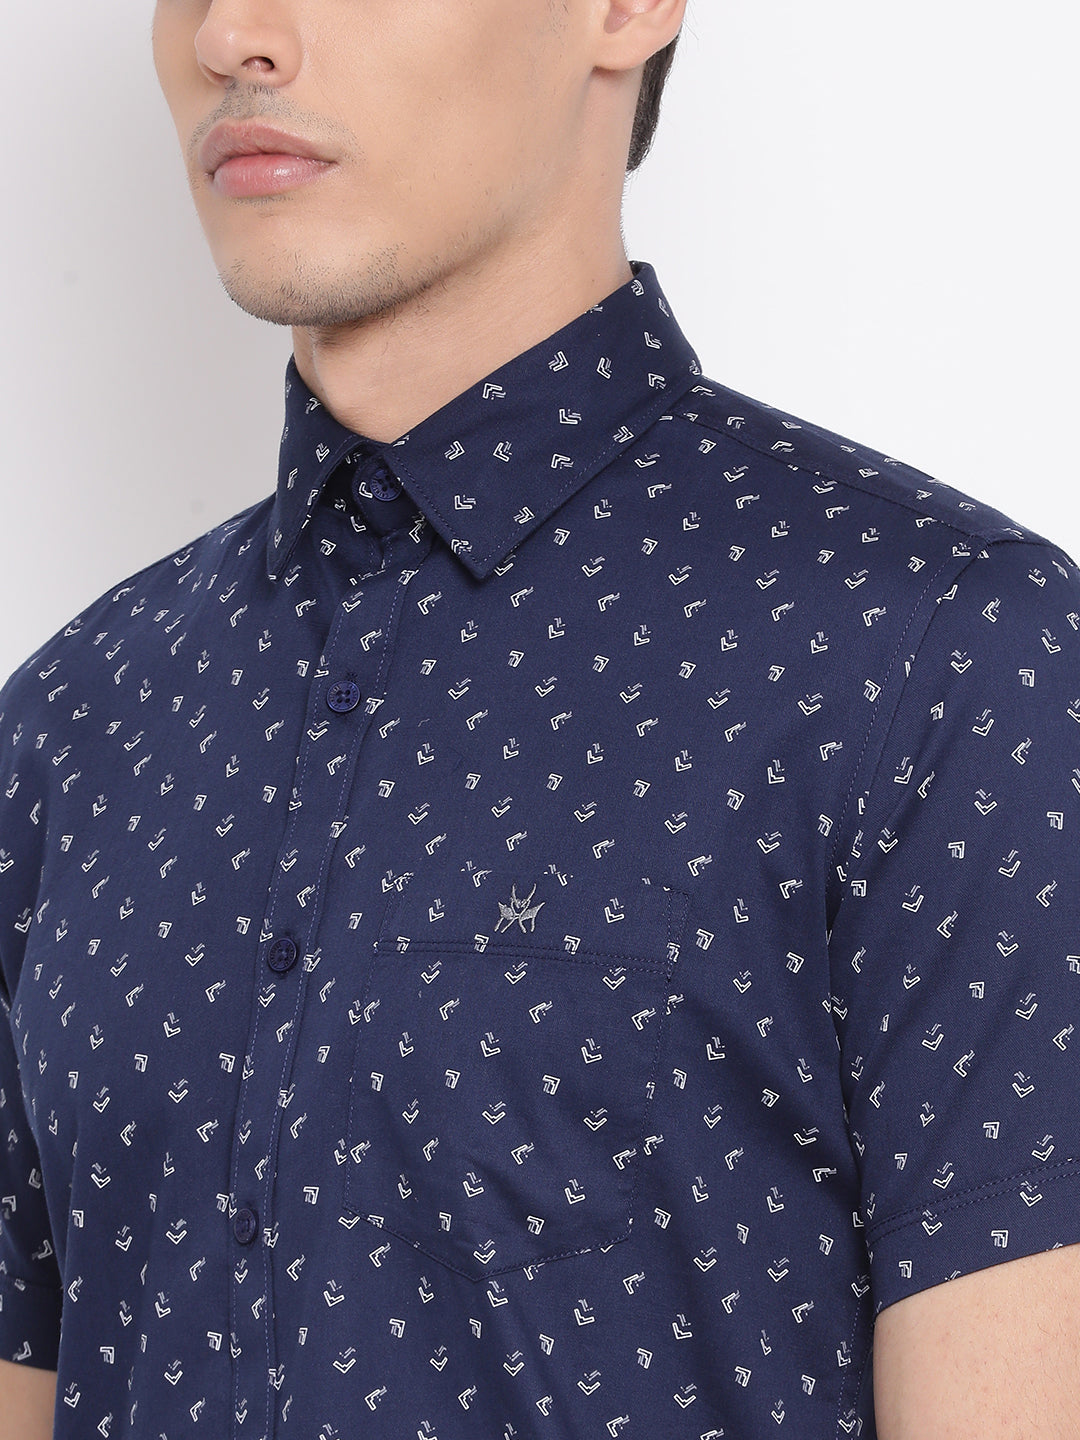 Navy Blue Printed Spread Collar Slim Fit Shirt - Men Shirts